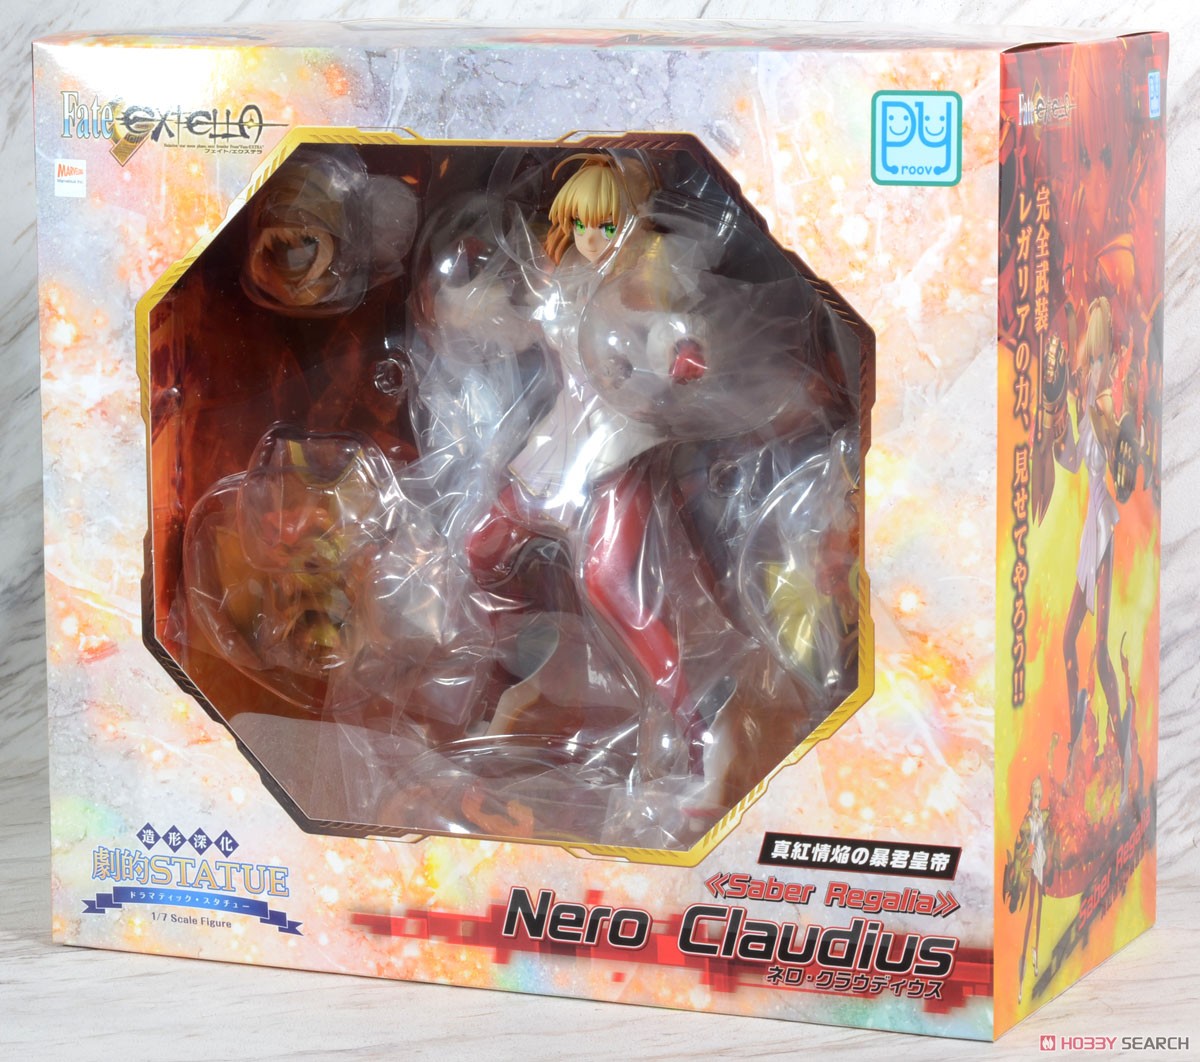 Fate/EXTELLA 《セイバー レガリア》 ネロ・クラウディウス 造形深化 劇的STATUE 01 (フィギュア) パッケージ1